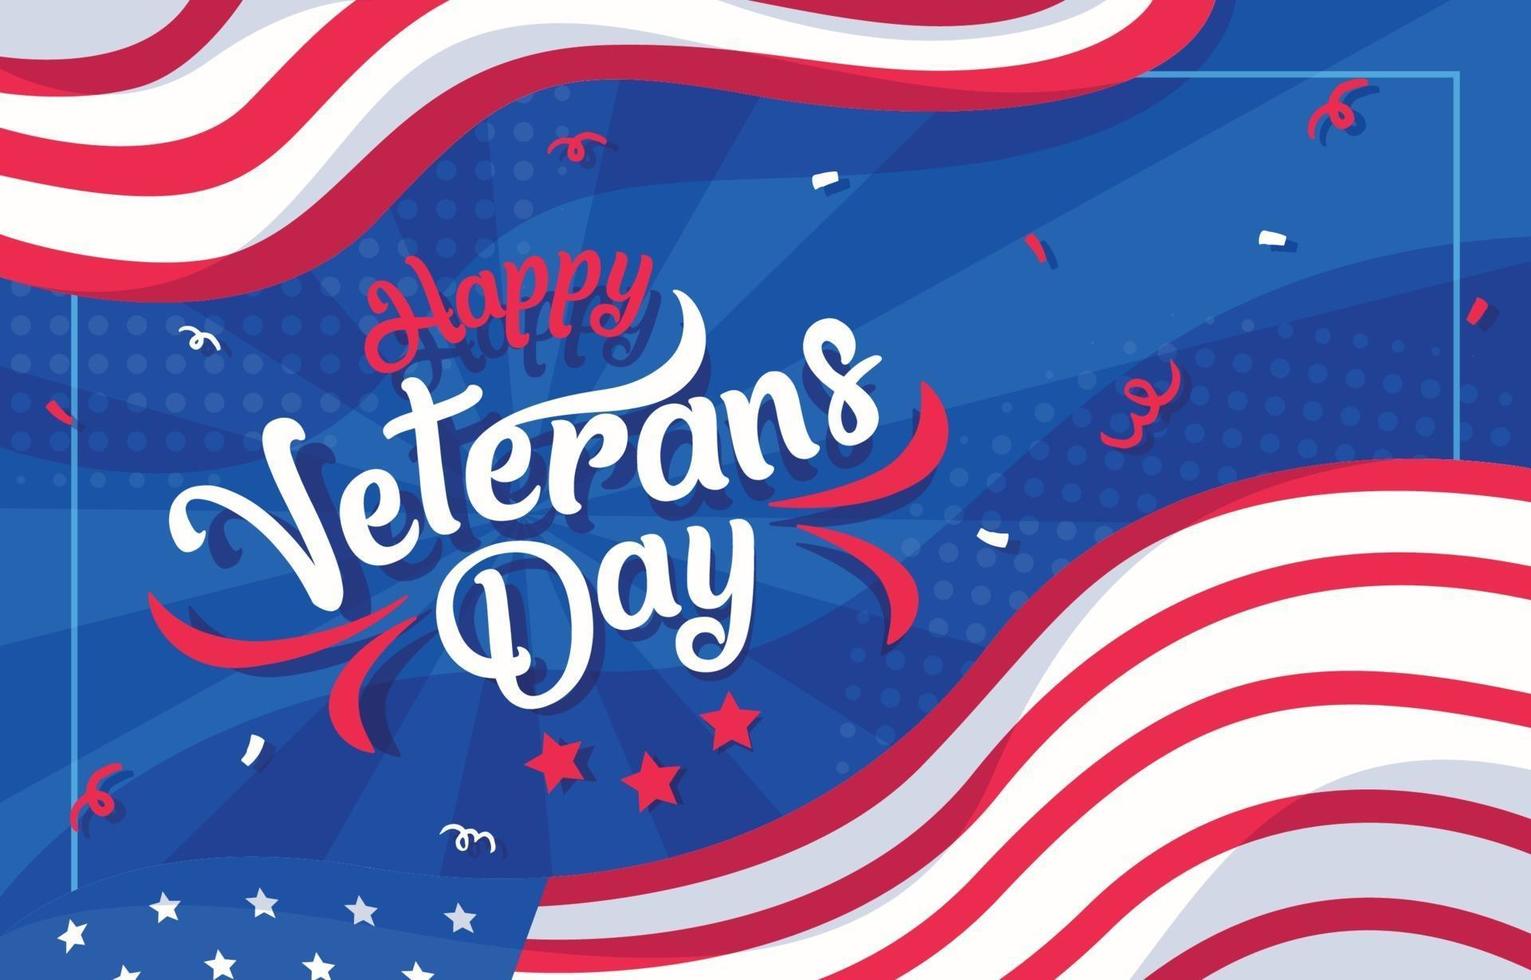 Veterans Day Background vector